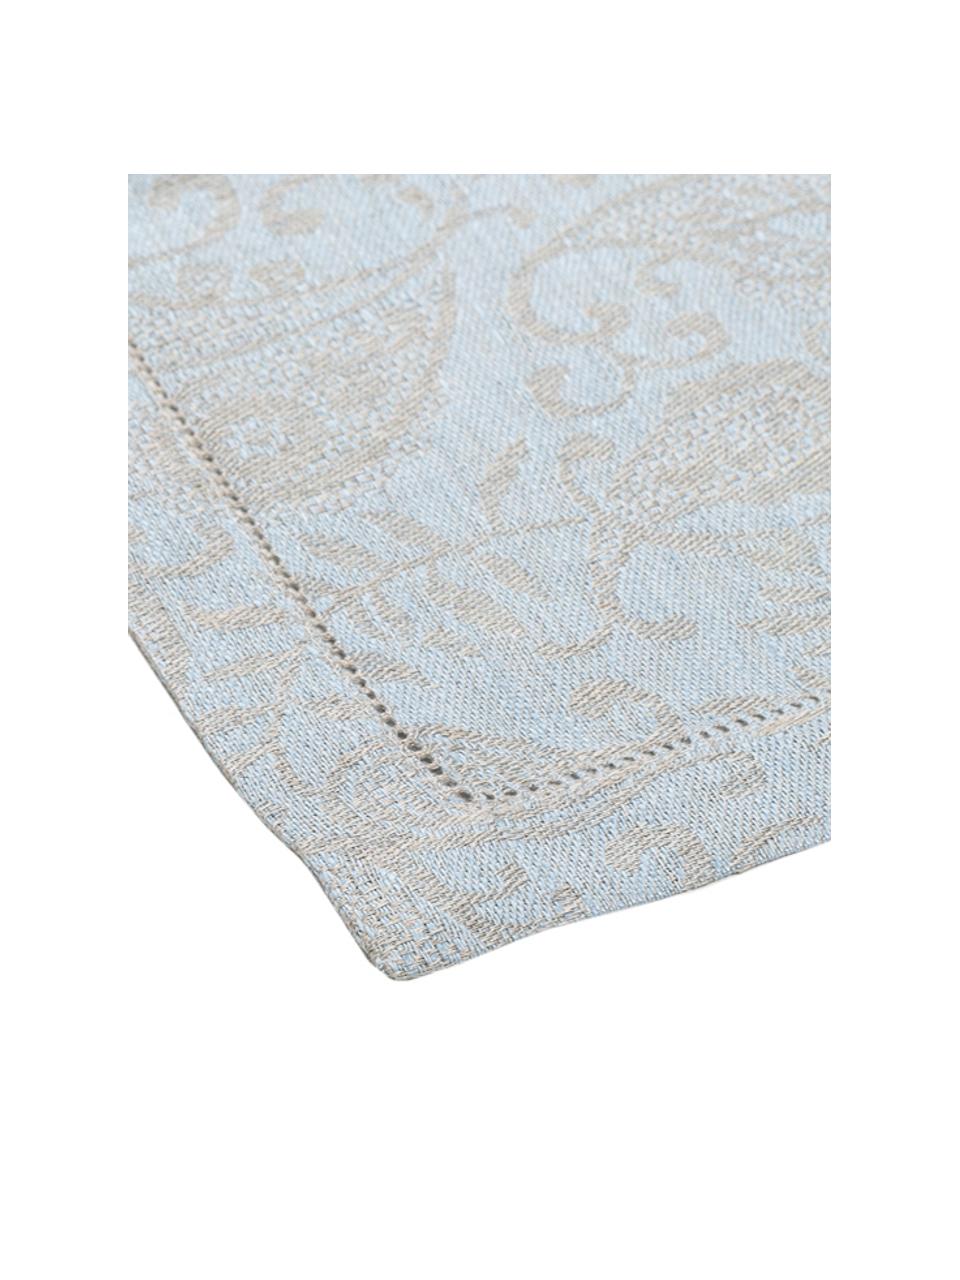 Linnen servetten Agila met paisley patroon, 6 stuks, Blauw, beige, B 42 x L 42 cm